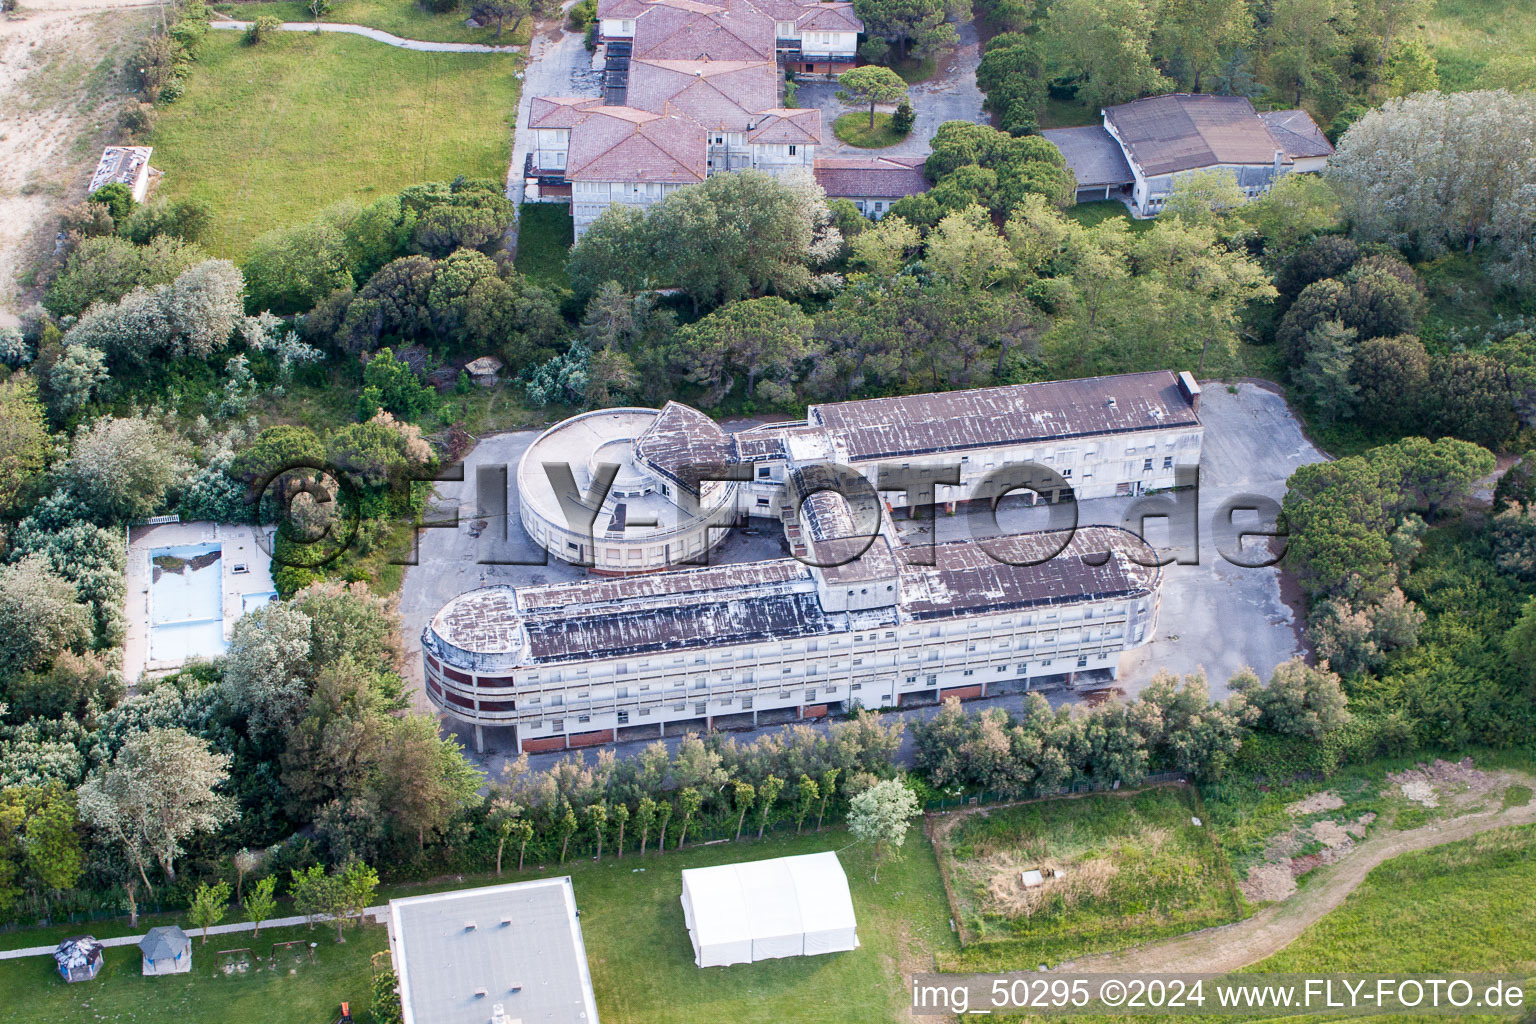 Aerial view of Dilapidated building of ex Colonia La Nostra Famiglia in Duna Verde in Venetien, Italy